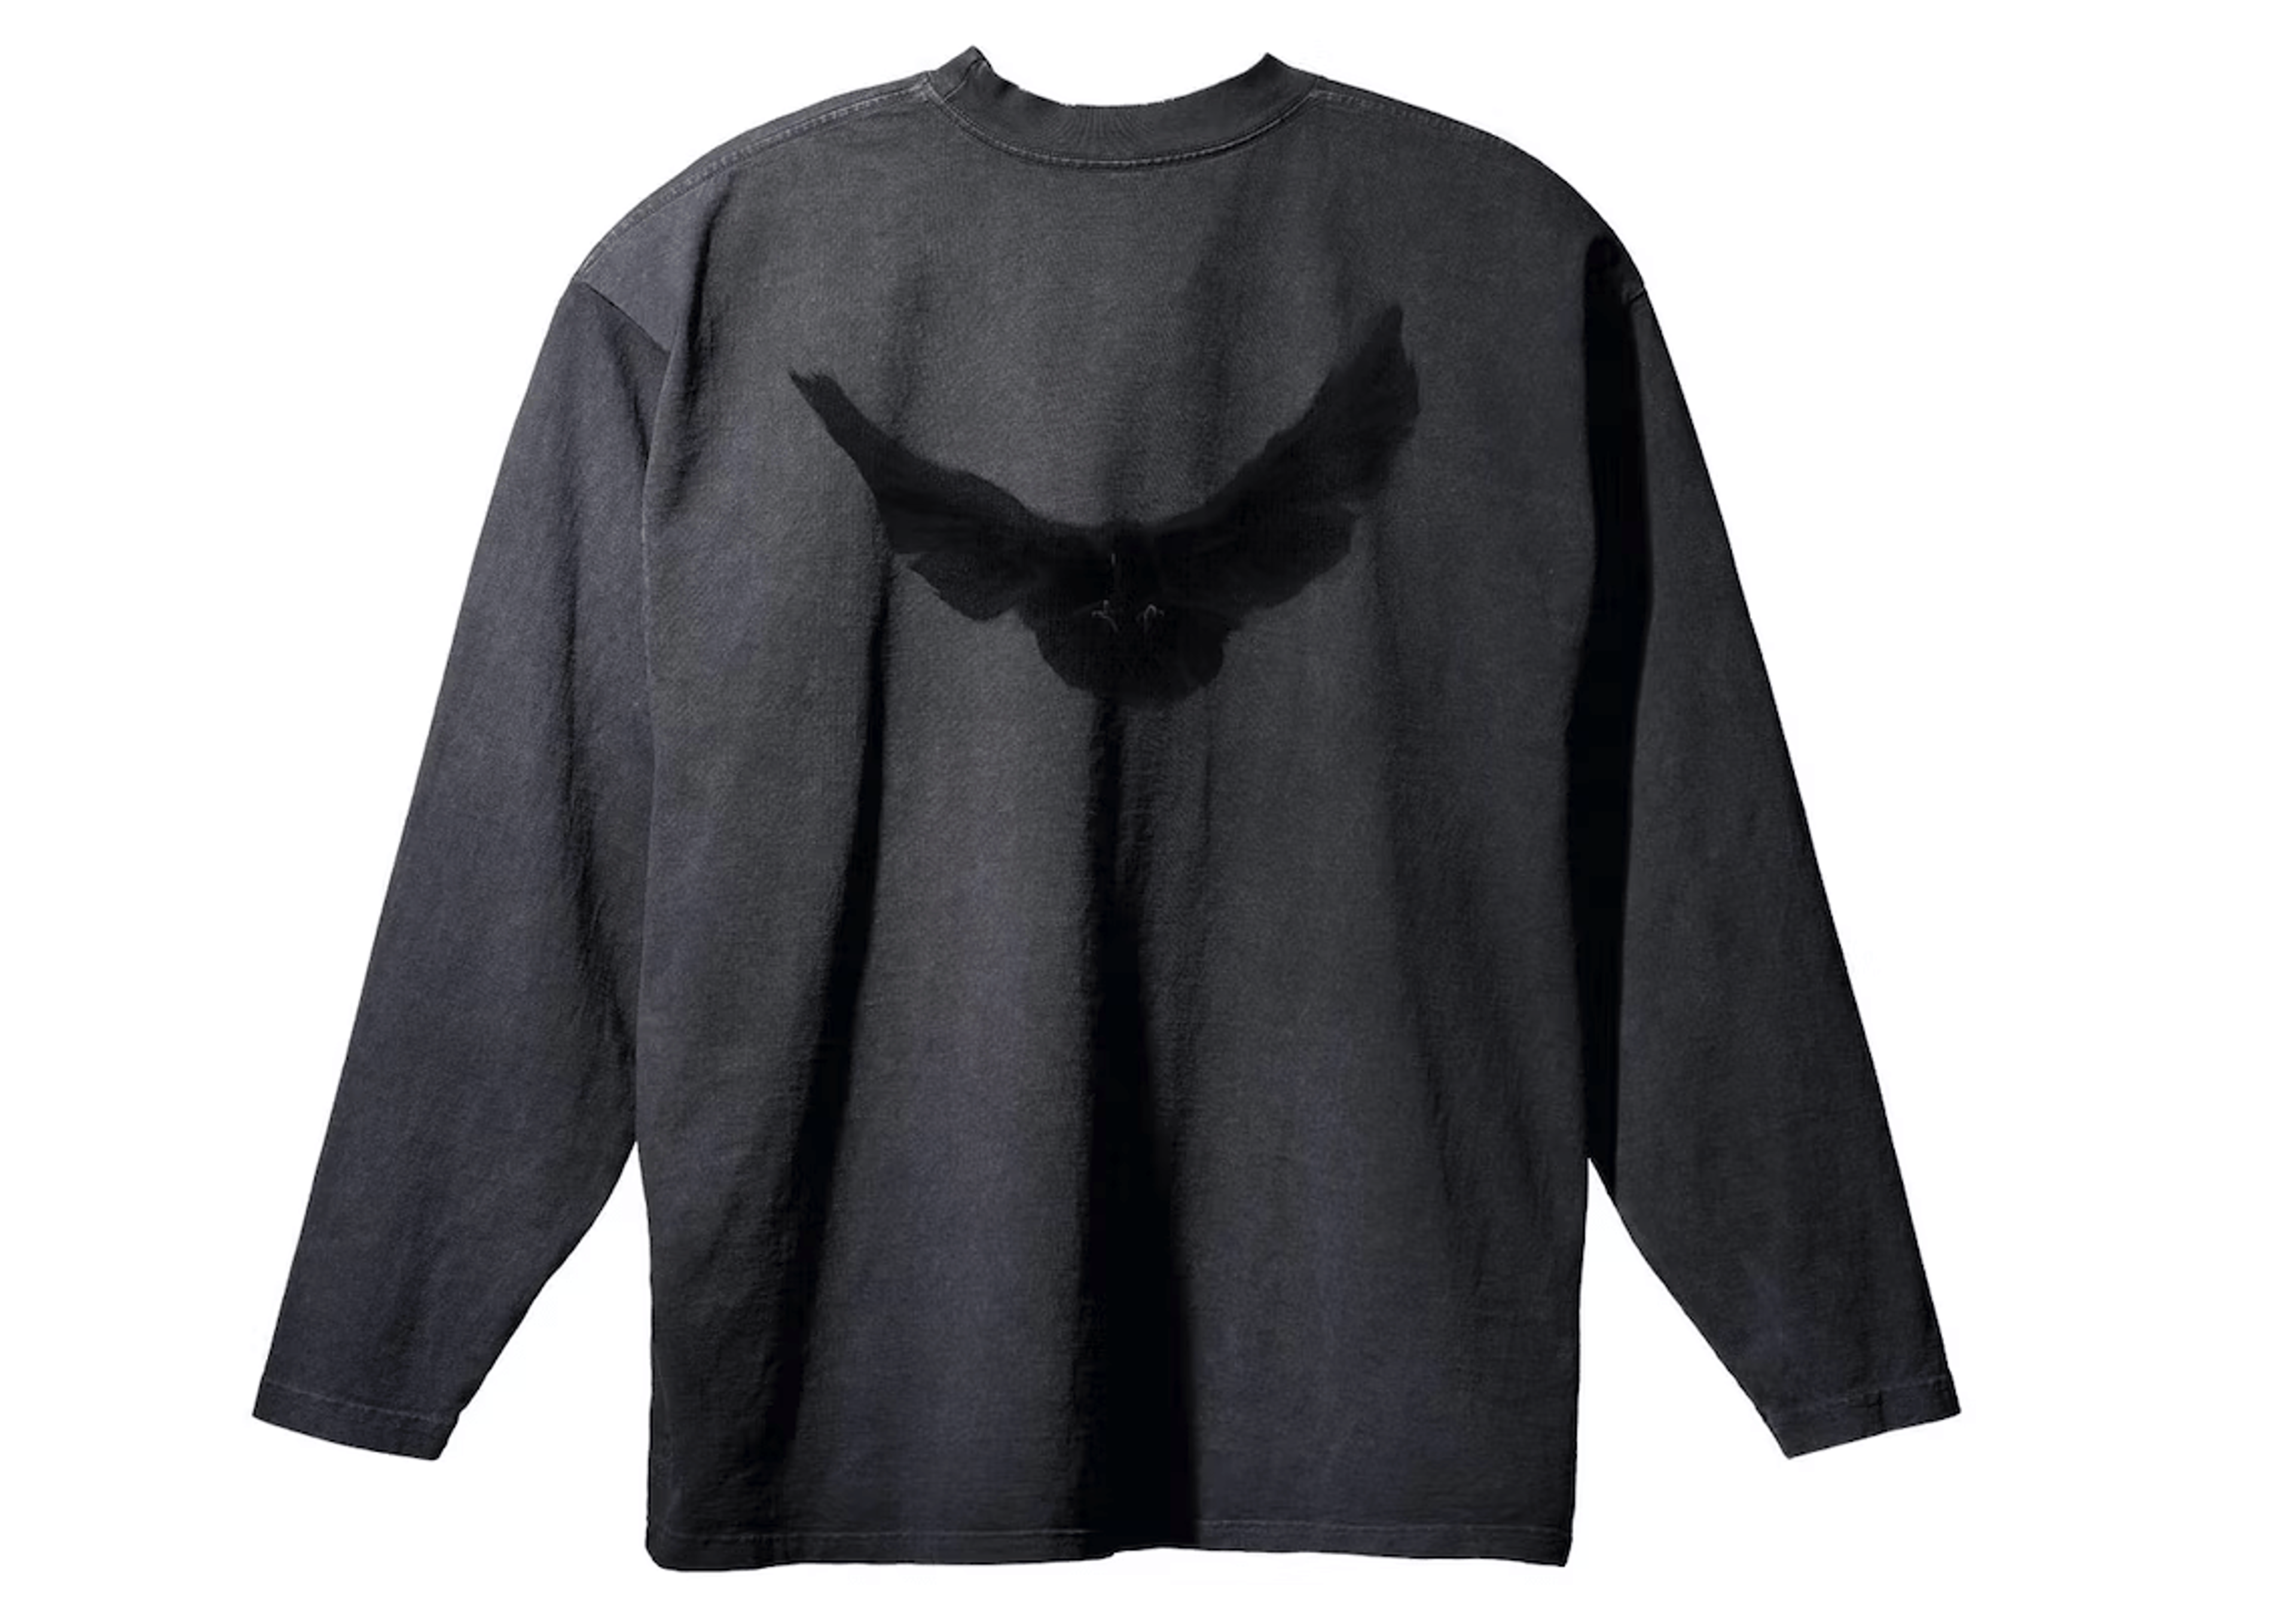 Yeezy Gap Dove Long Sleeve Tee Shirt Washed Black